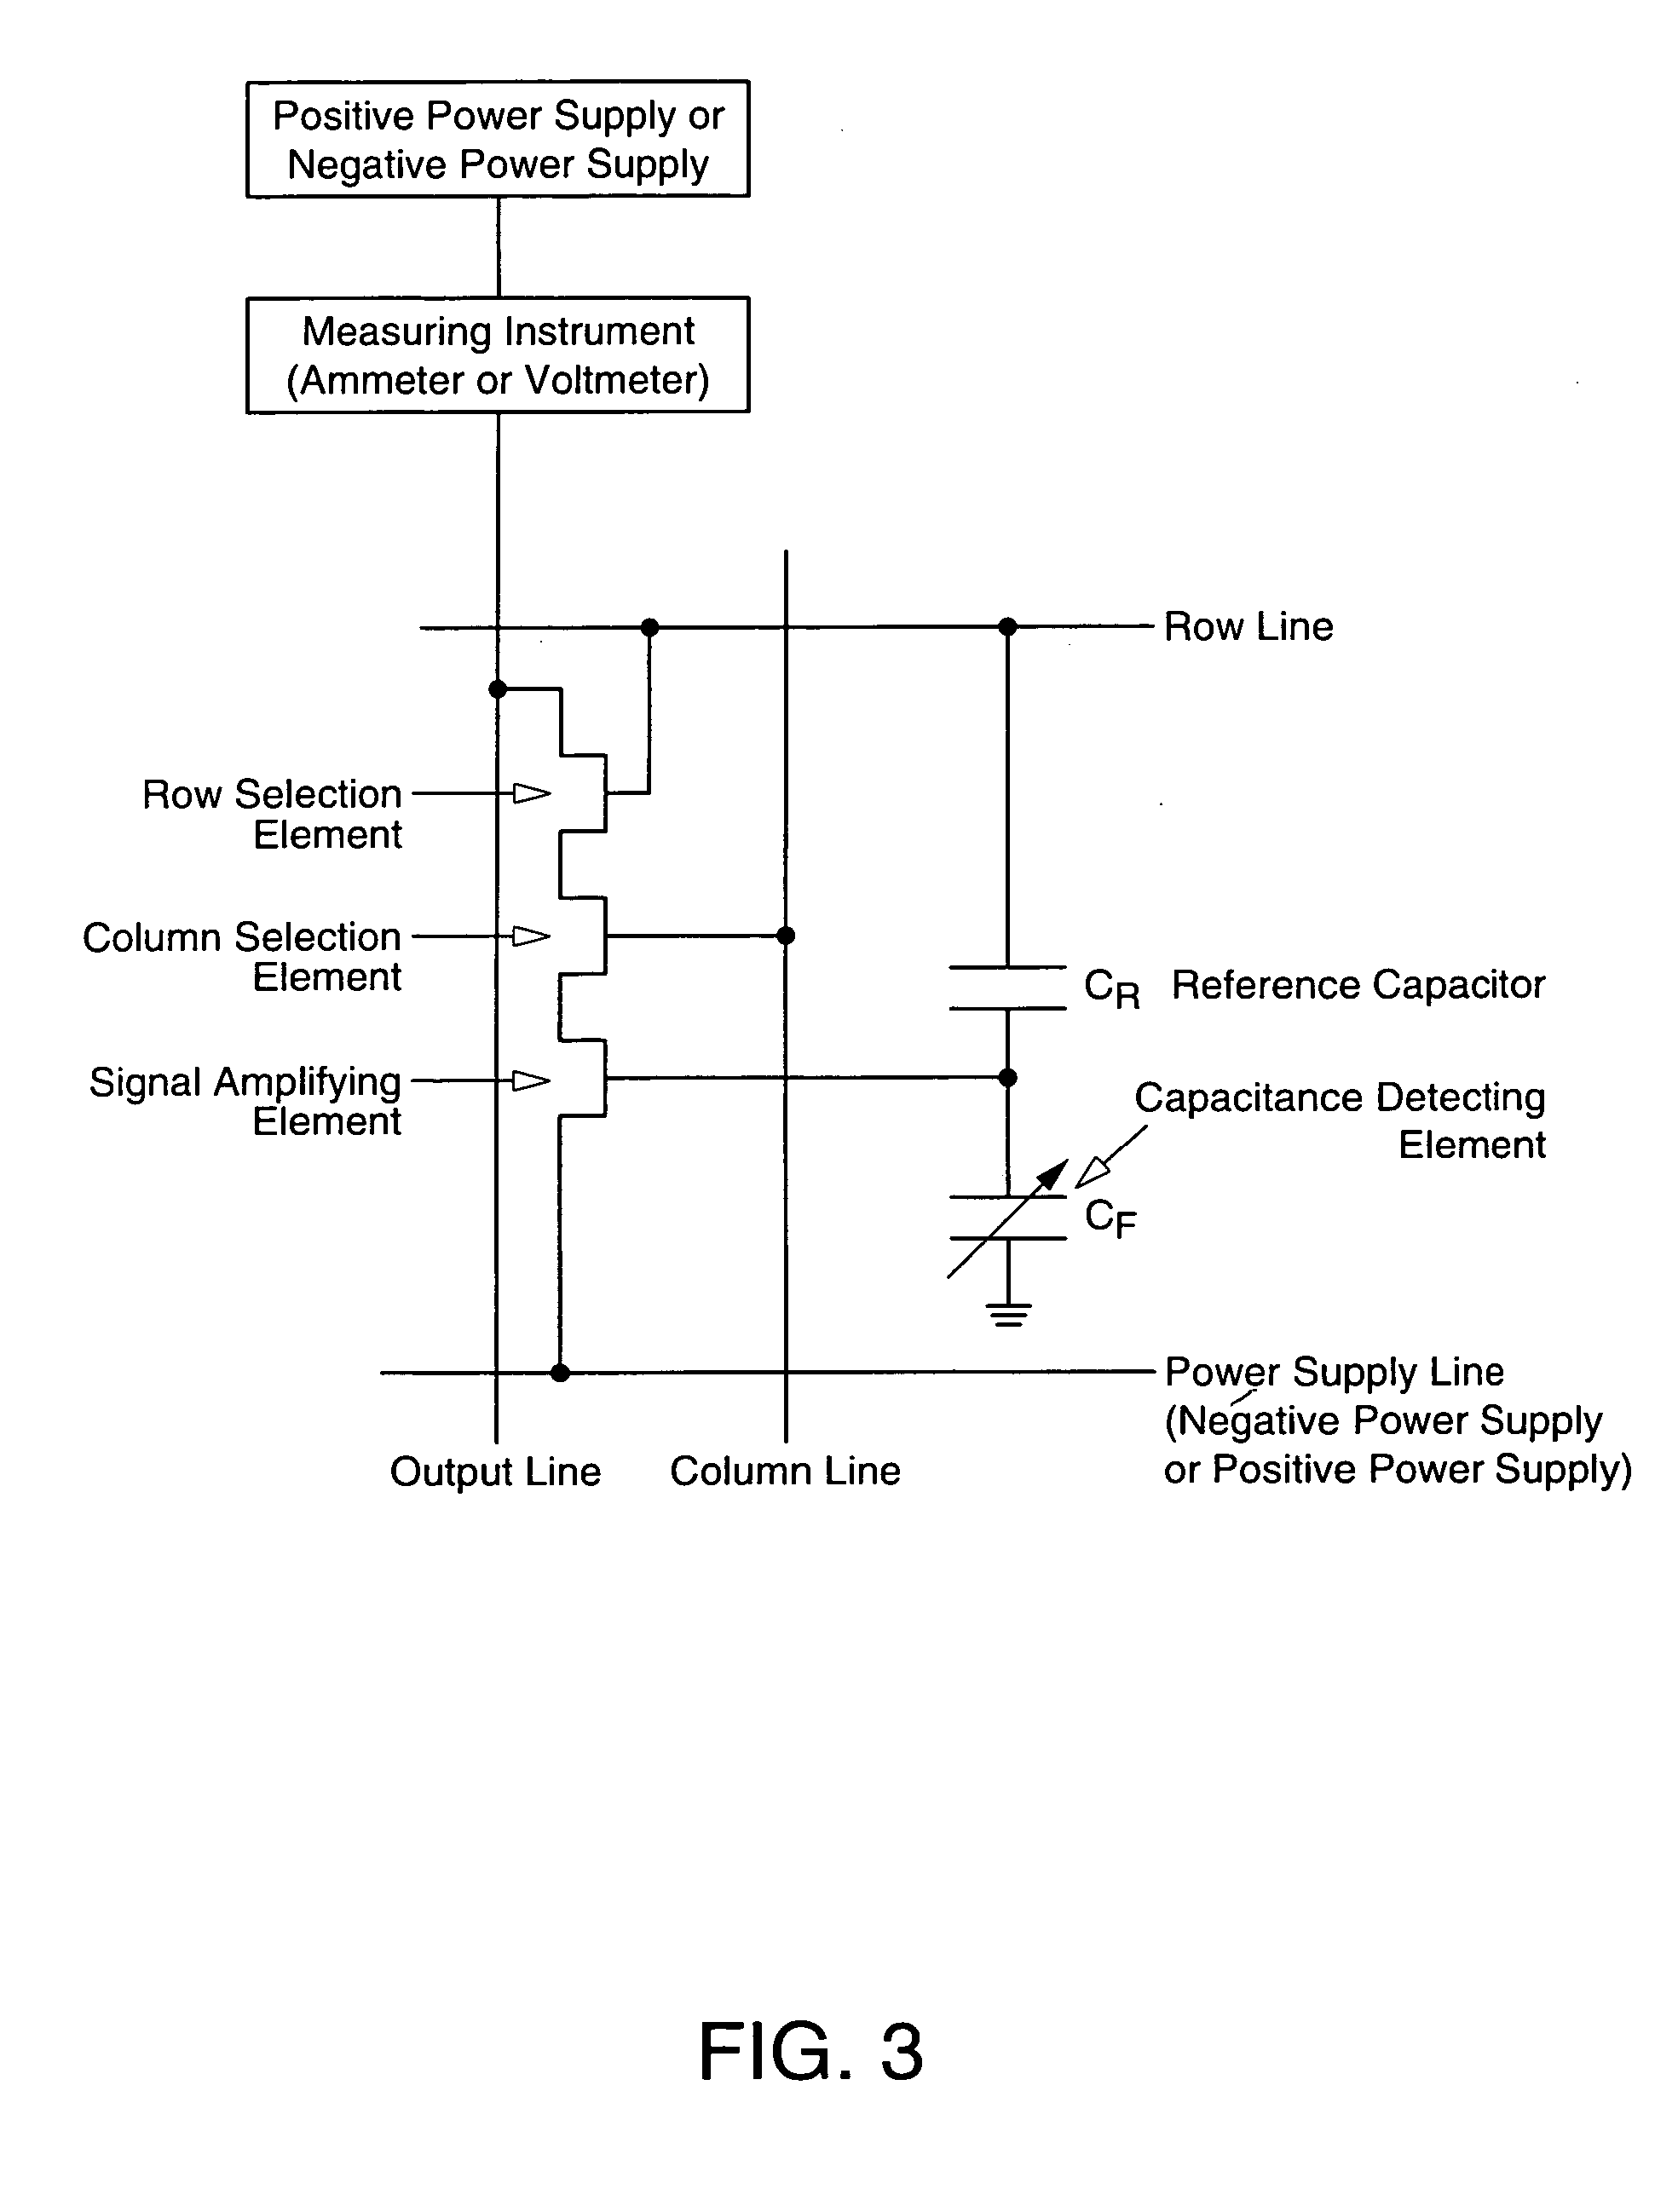 Electrostatic capacitance detection device